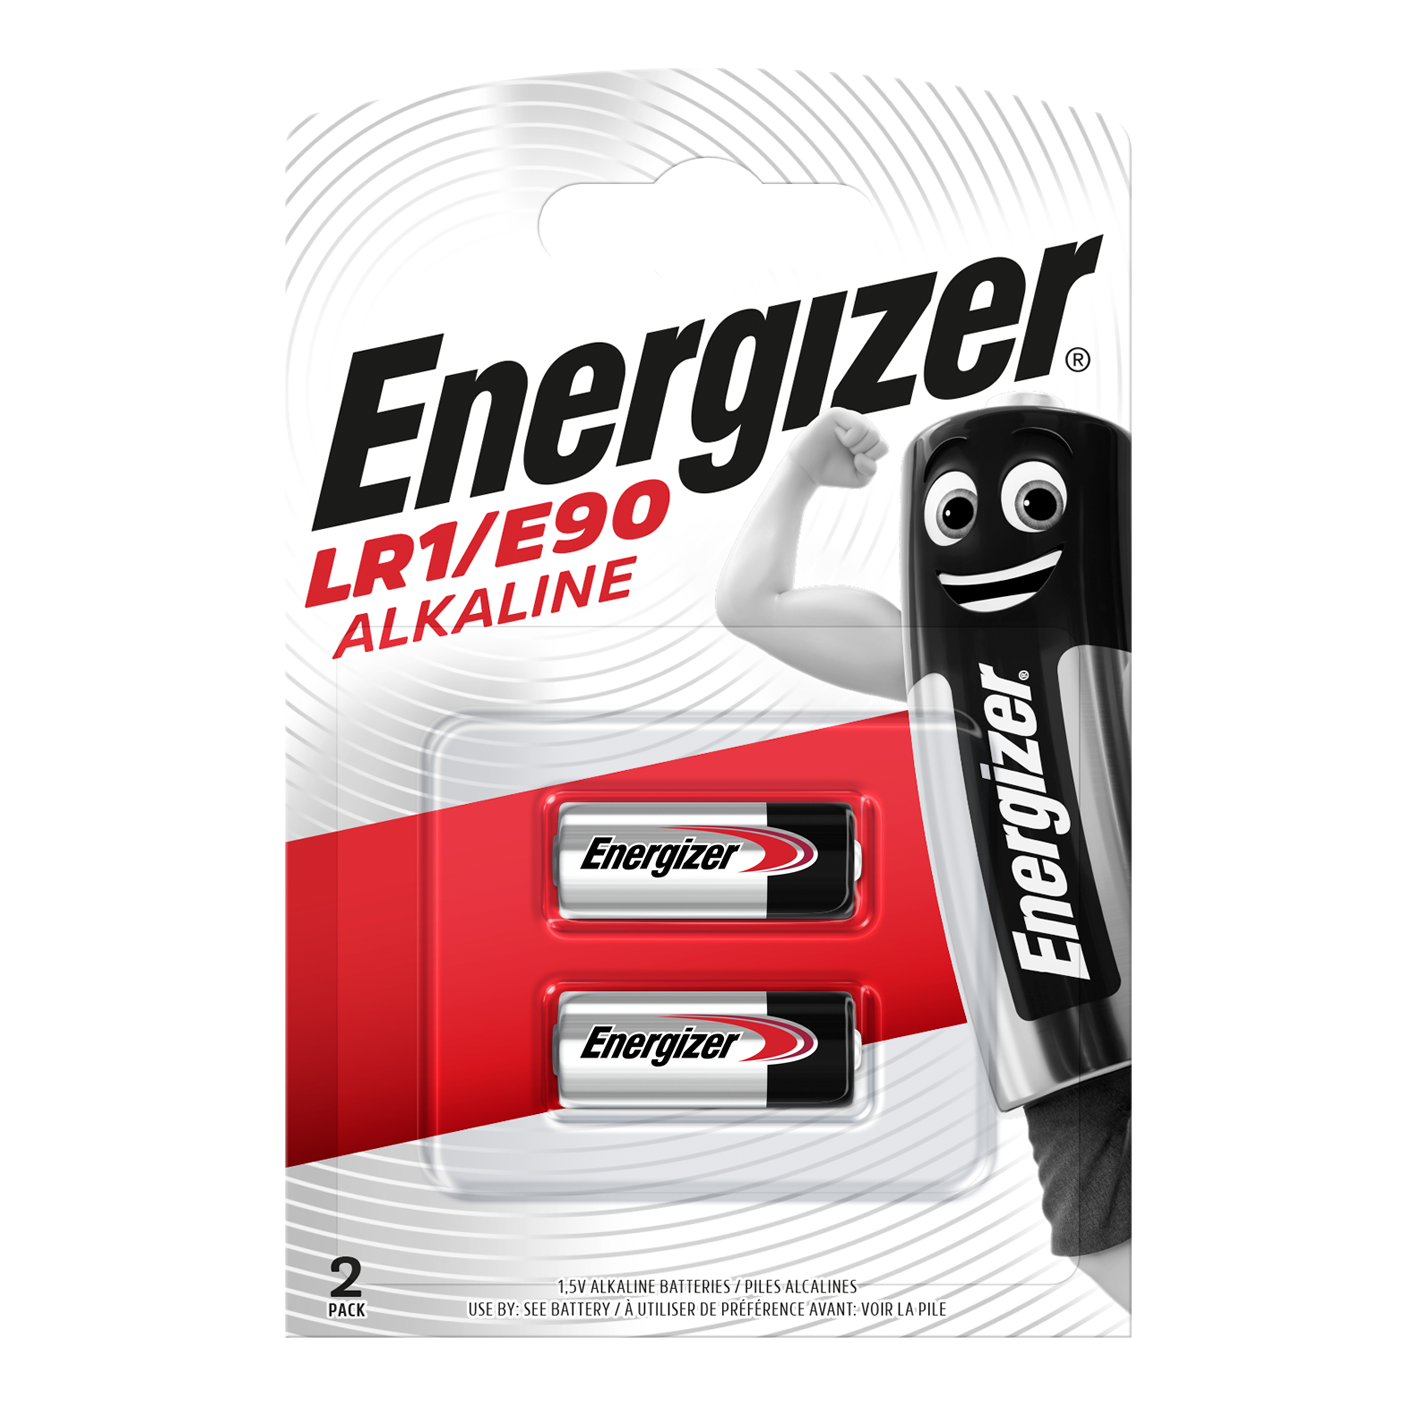 Energizer LR1/E90 alcalino, paquete de 2